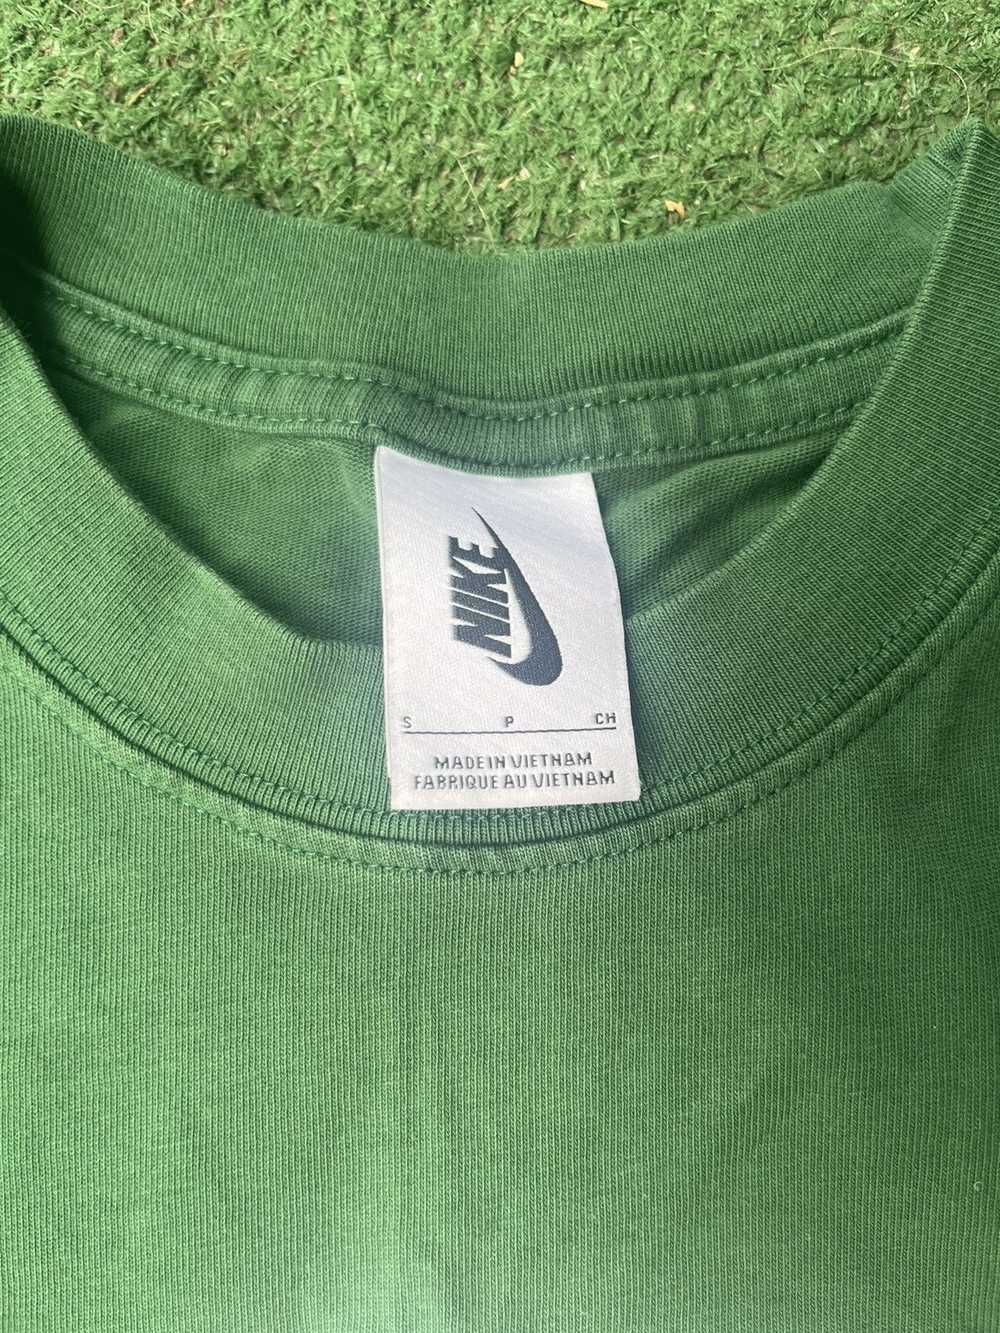 Nike × Stussy Stussy x Nike Green T-Shirt - image 2